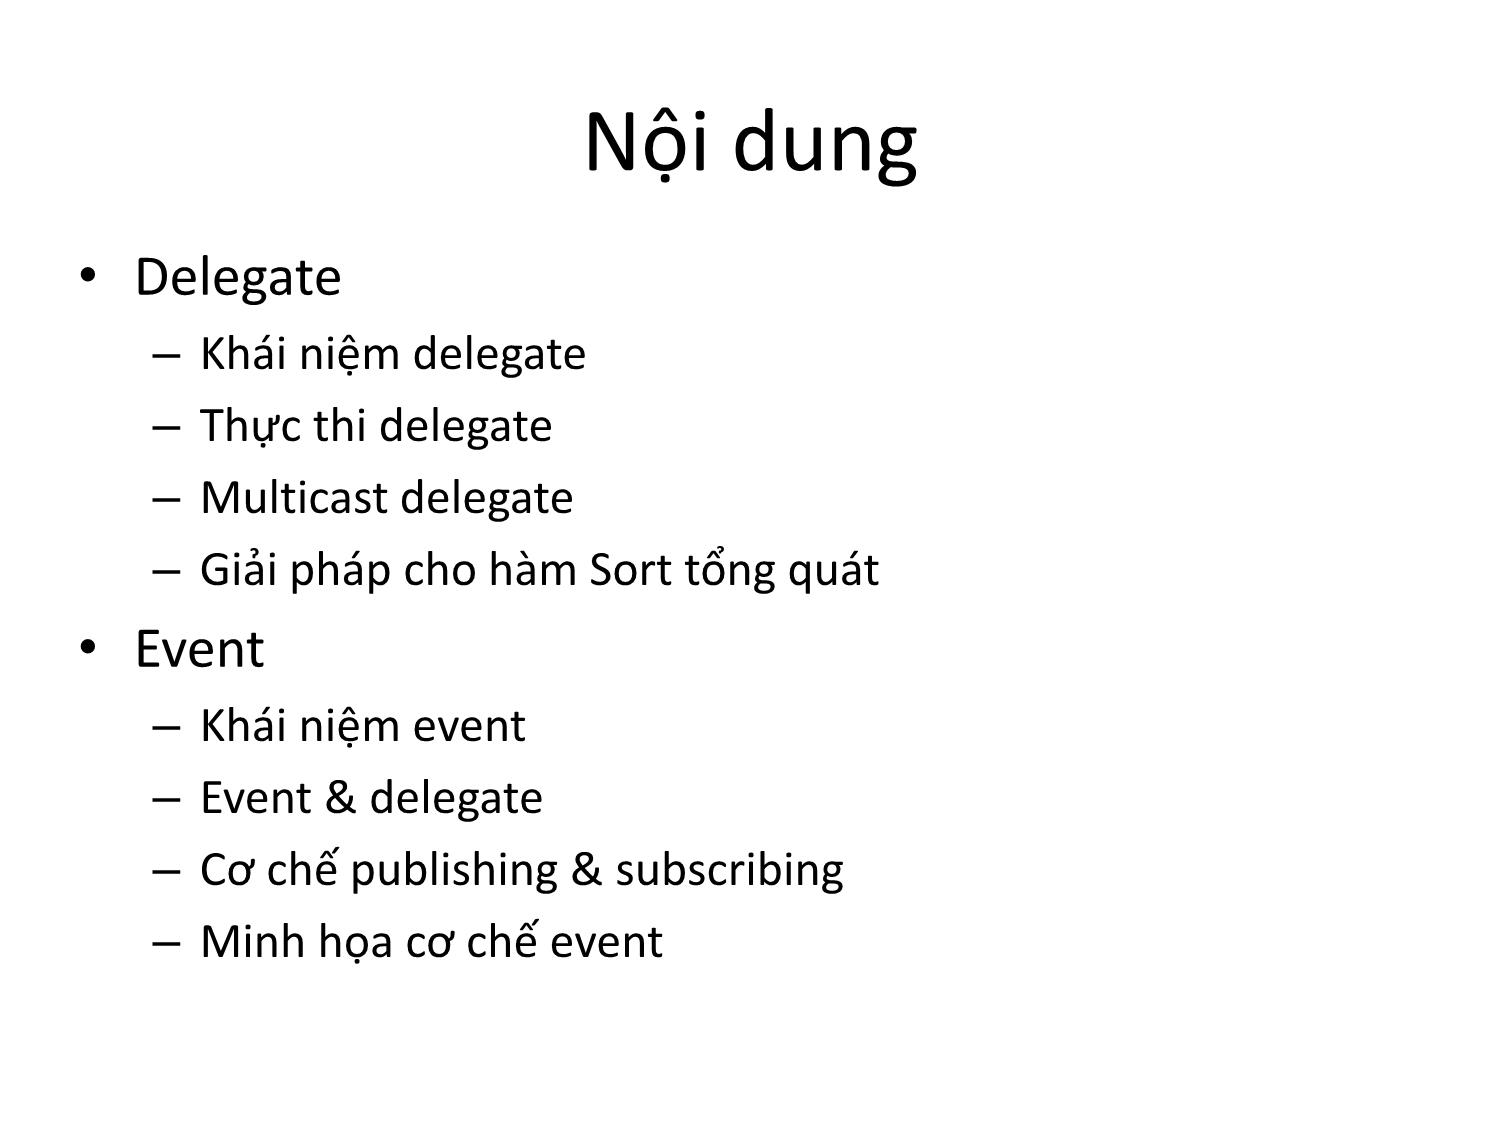 Cơ chế Delegate & Event trang 2